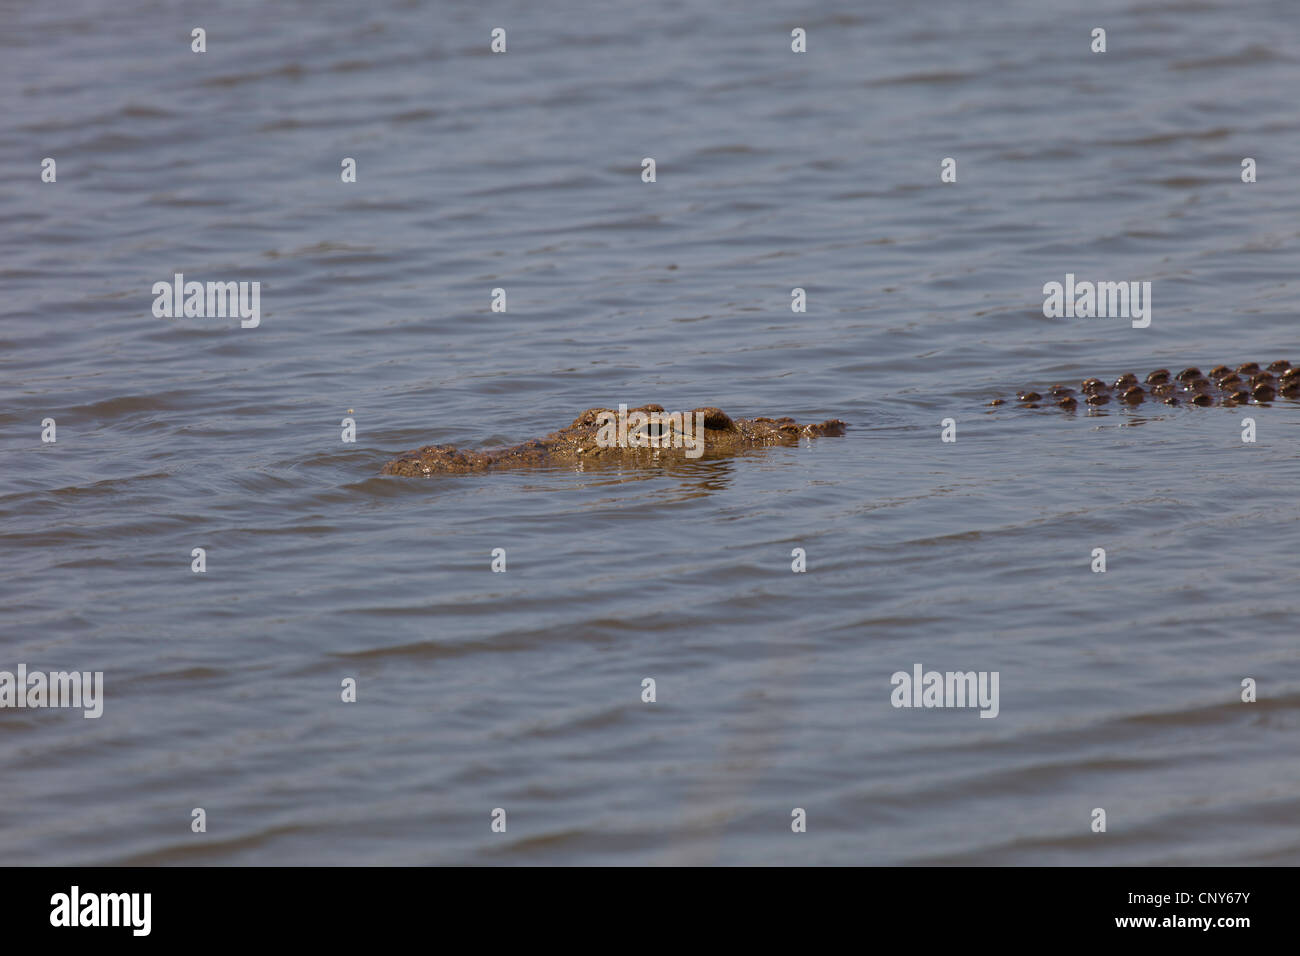 Crocodile swimming in water Stock Photo